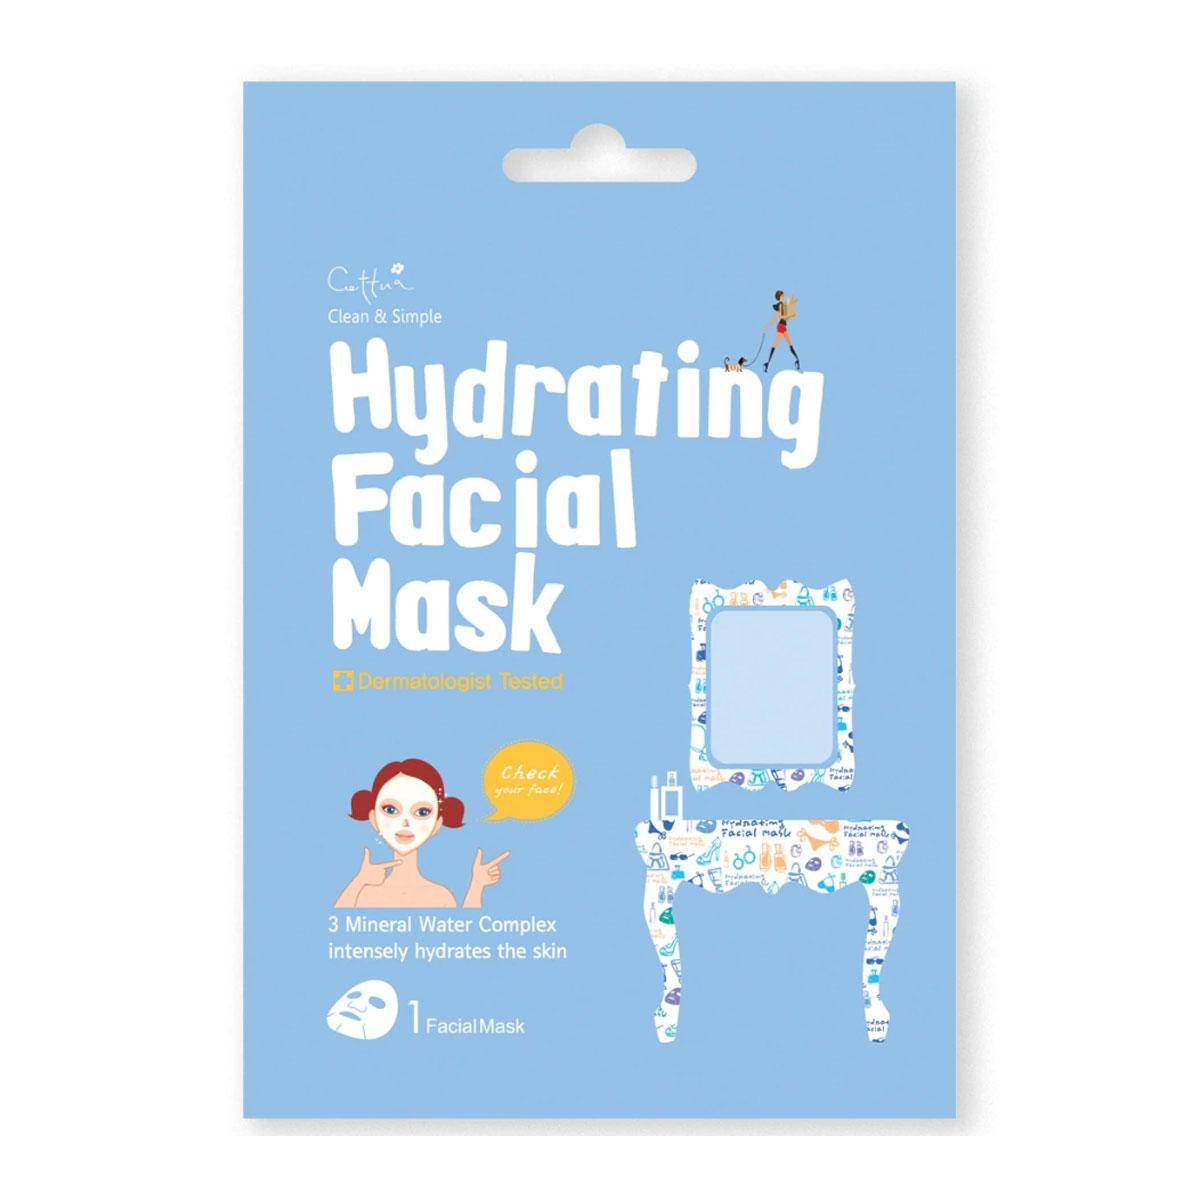 ماسک ابرسان کره ای - Hydrating fecial mask